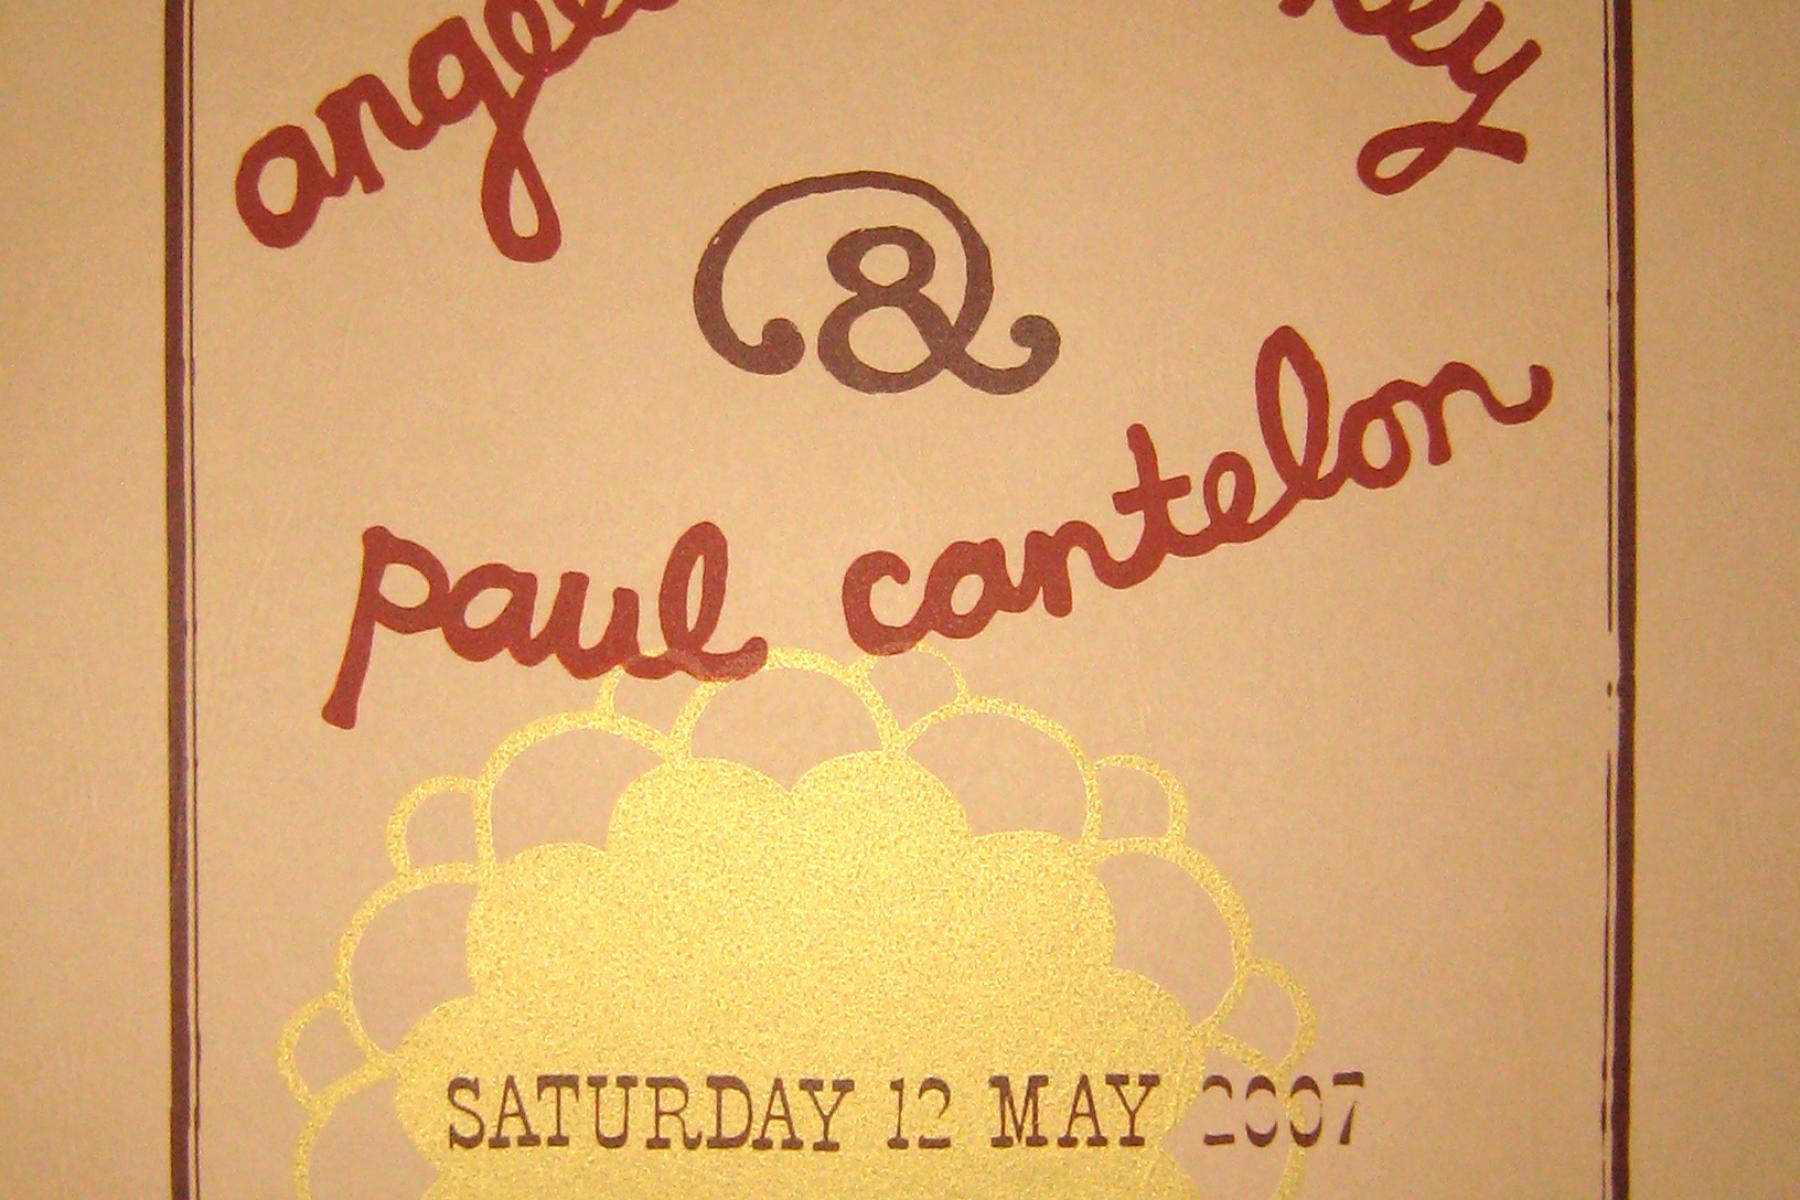 Limited-edition Angela McCluskey & Paul Cantelon poster